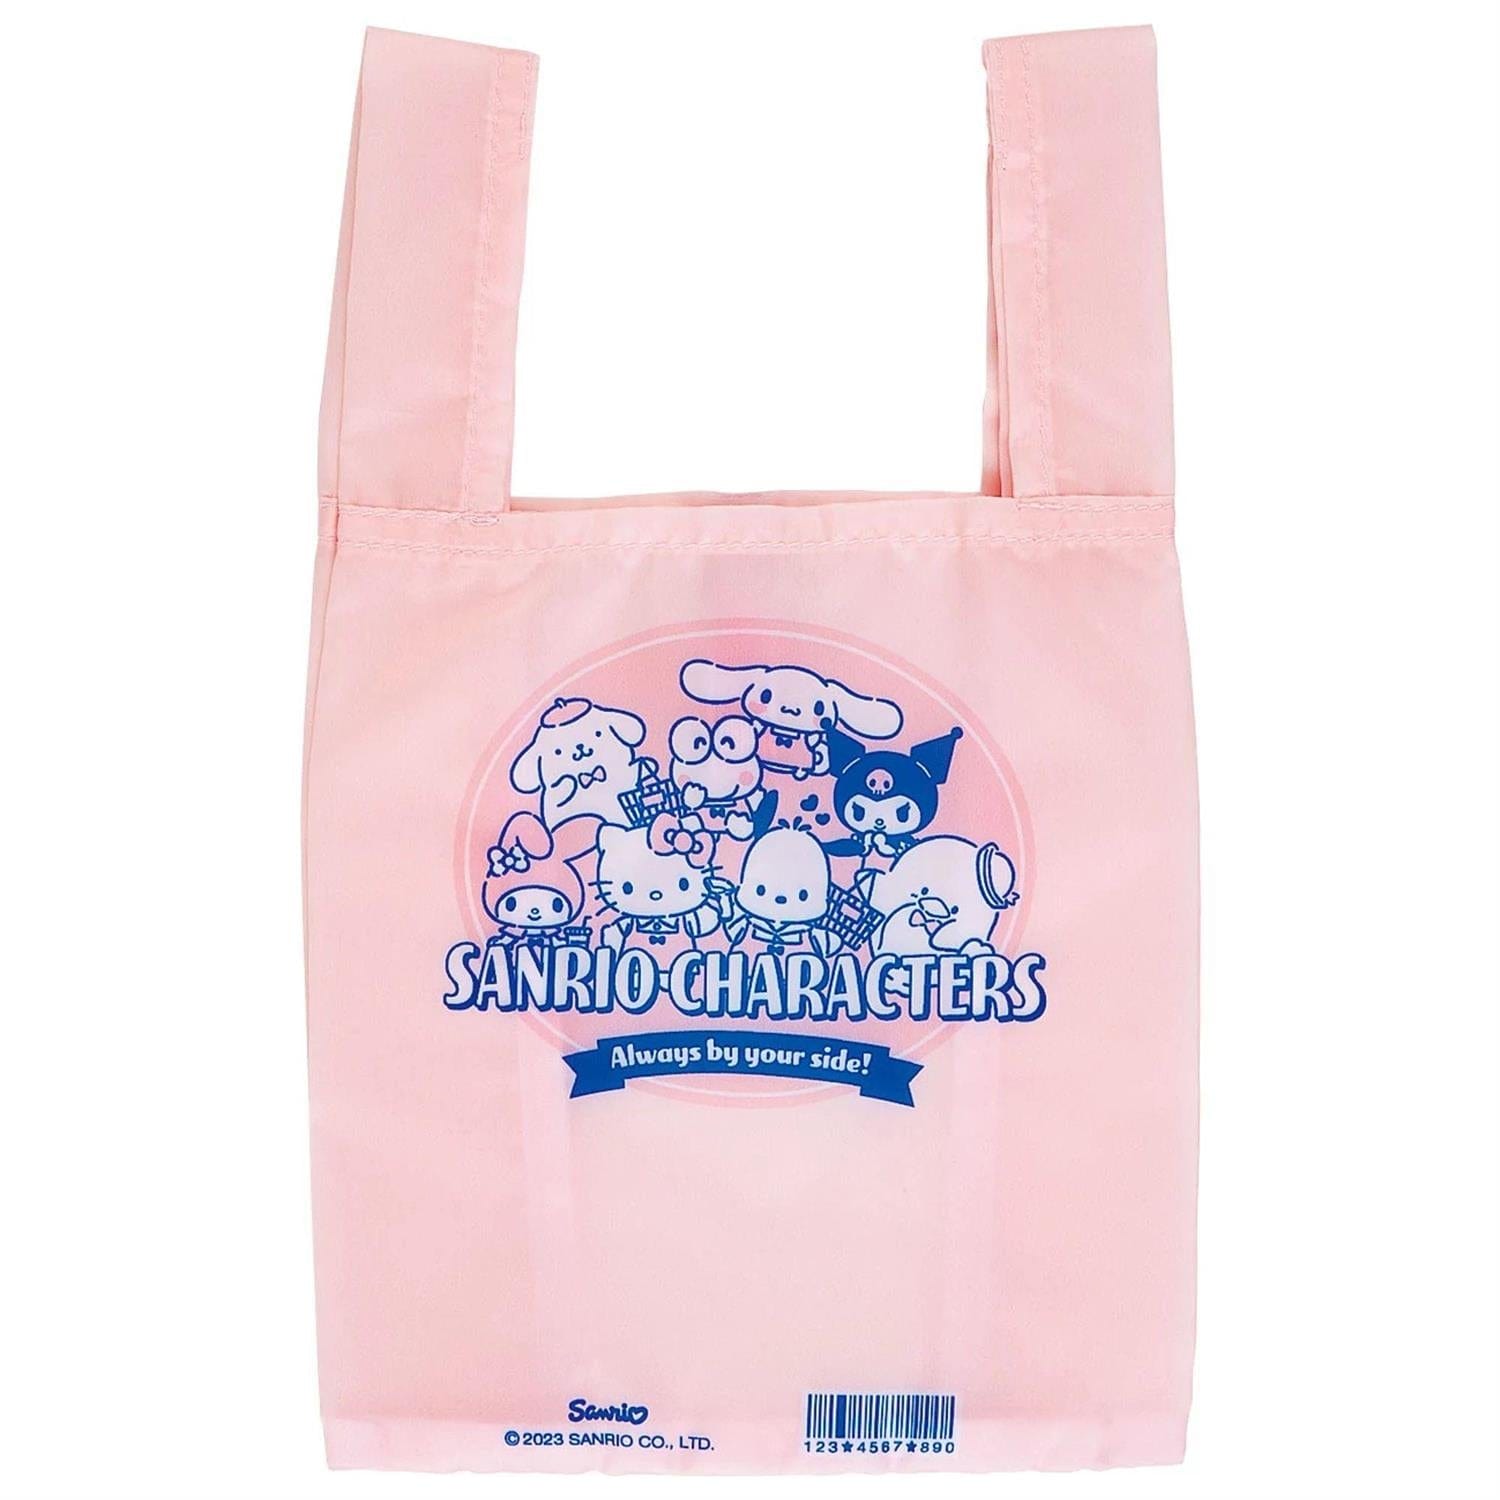 Sanrio Characters Pink Reusable Shopping Bag